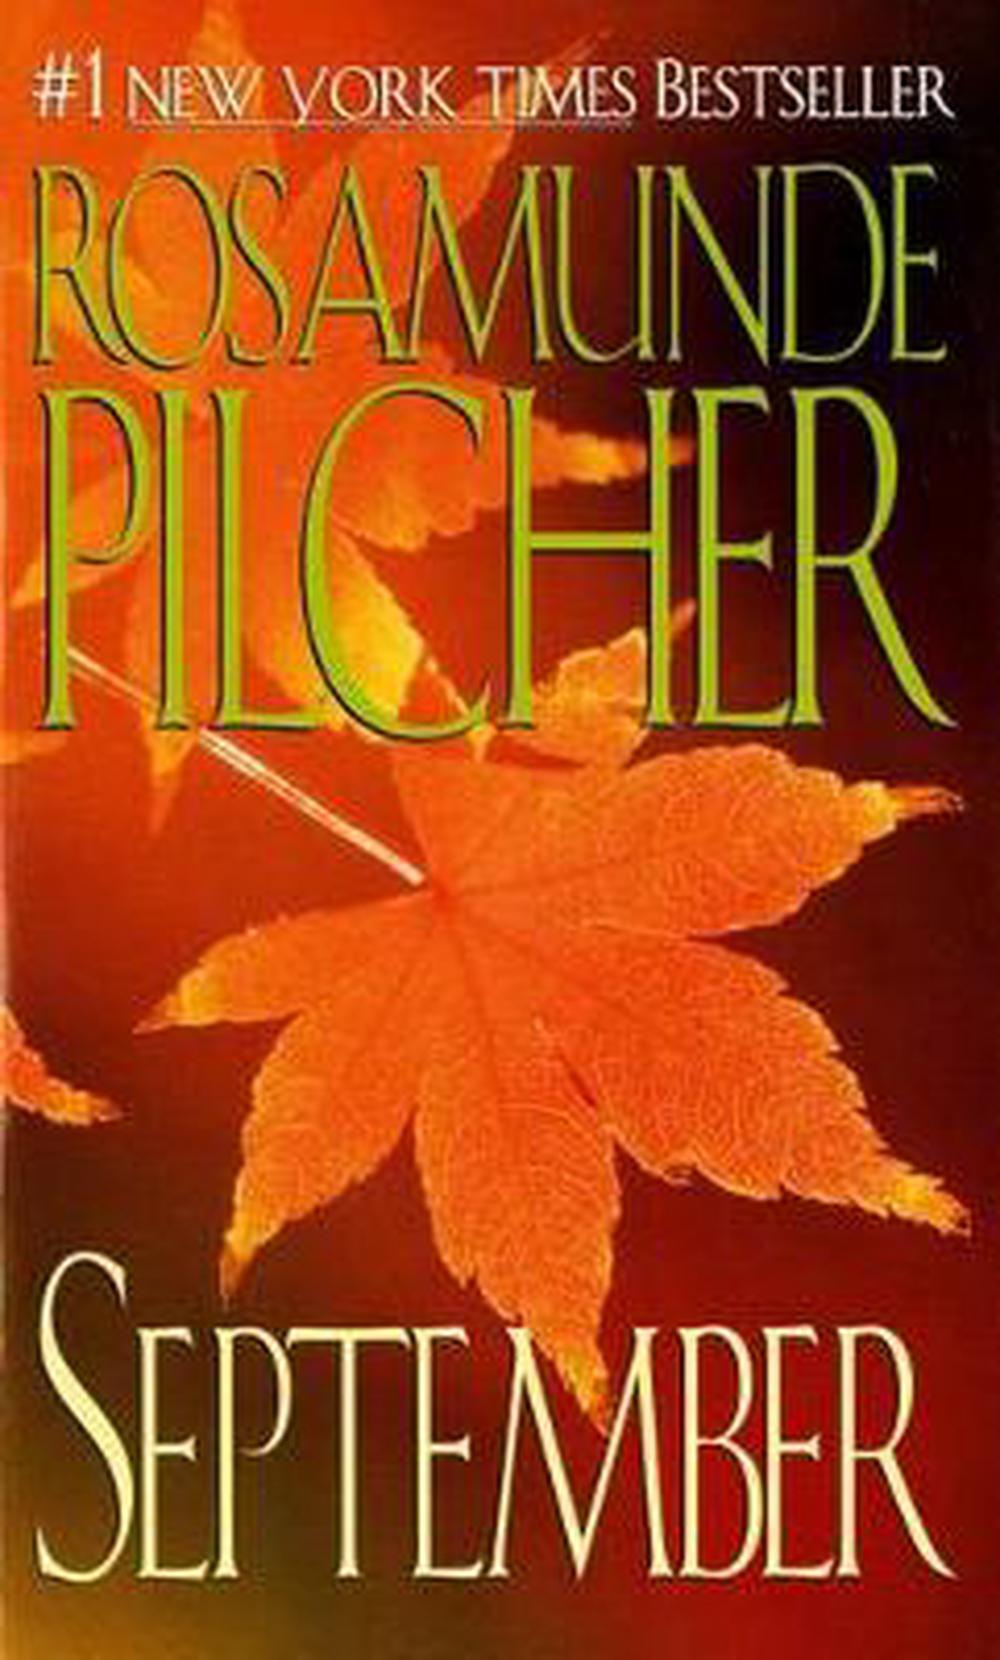 september rosamunde pilcher book review